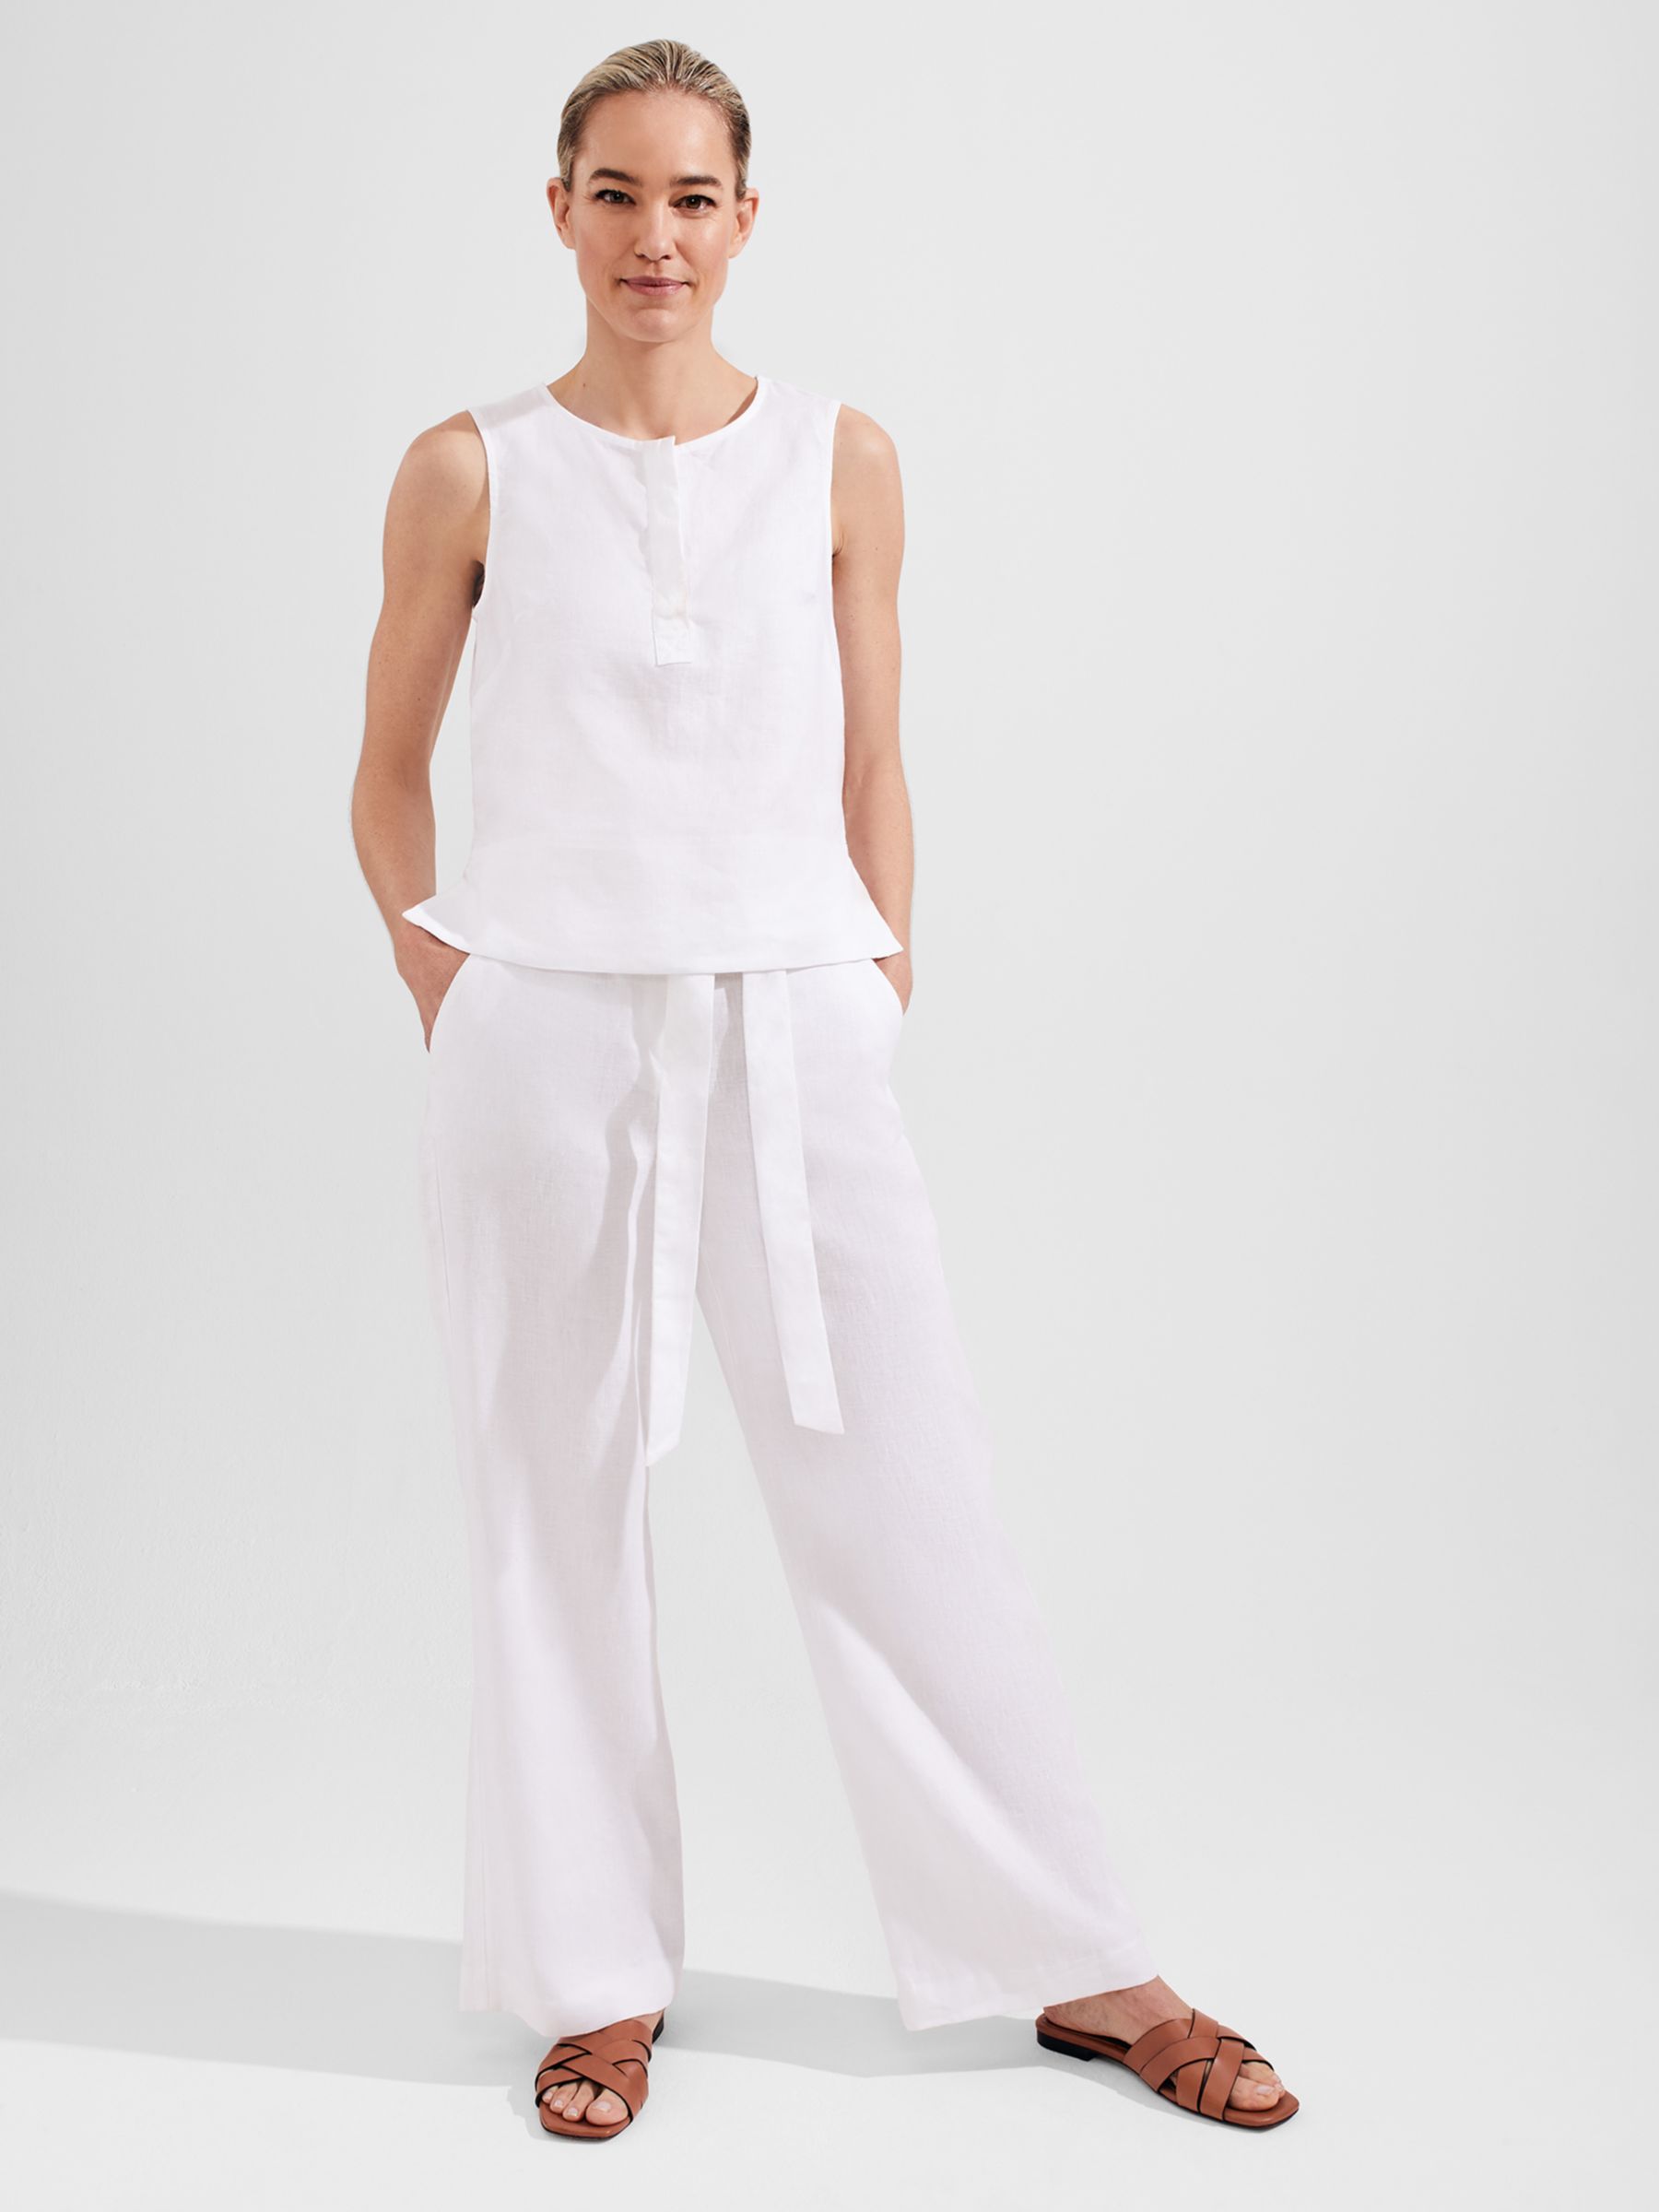 Hobbs Jacqui Linen Trousers, White at John Lewis & Partners